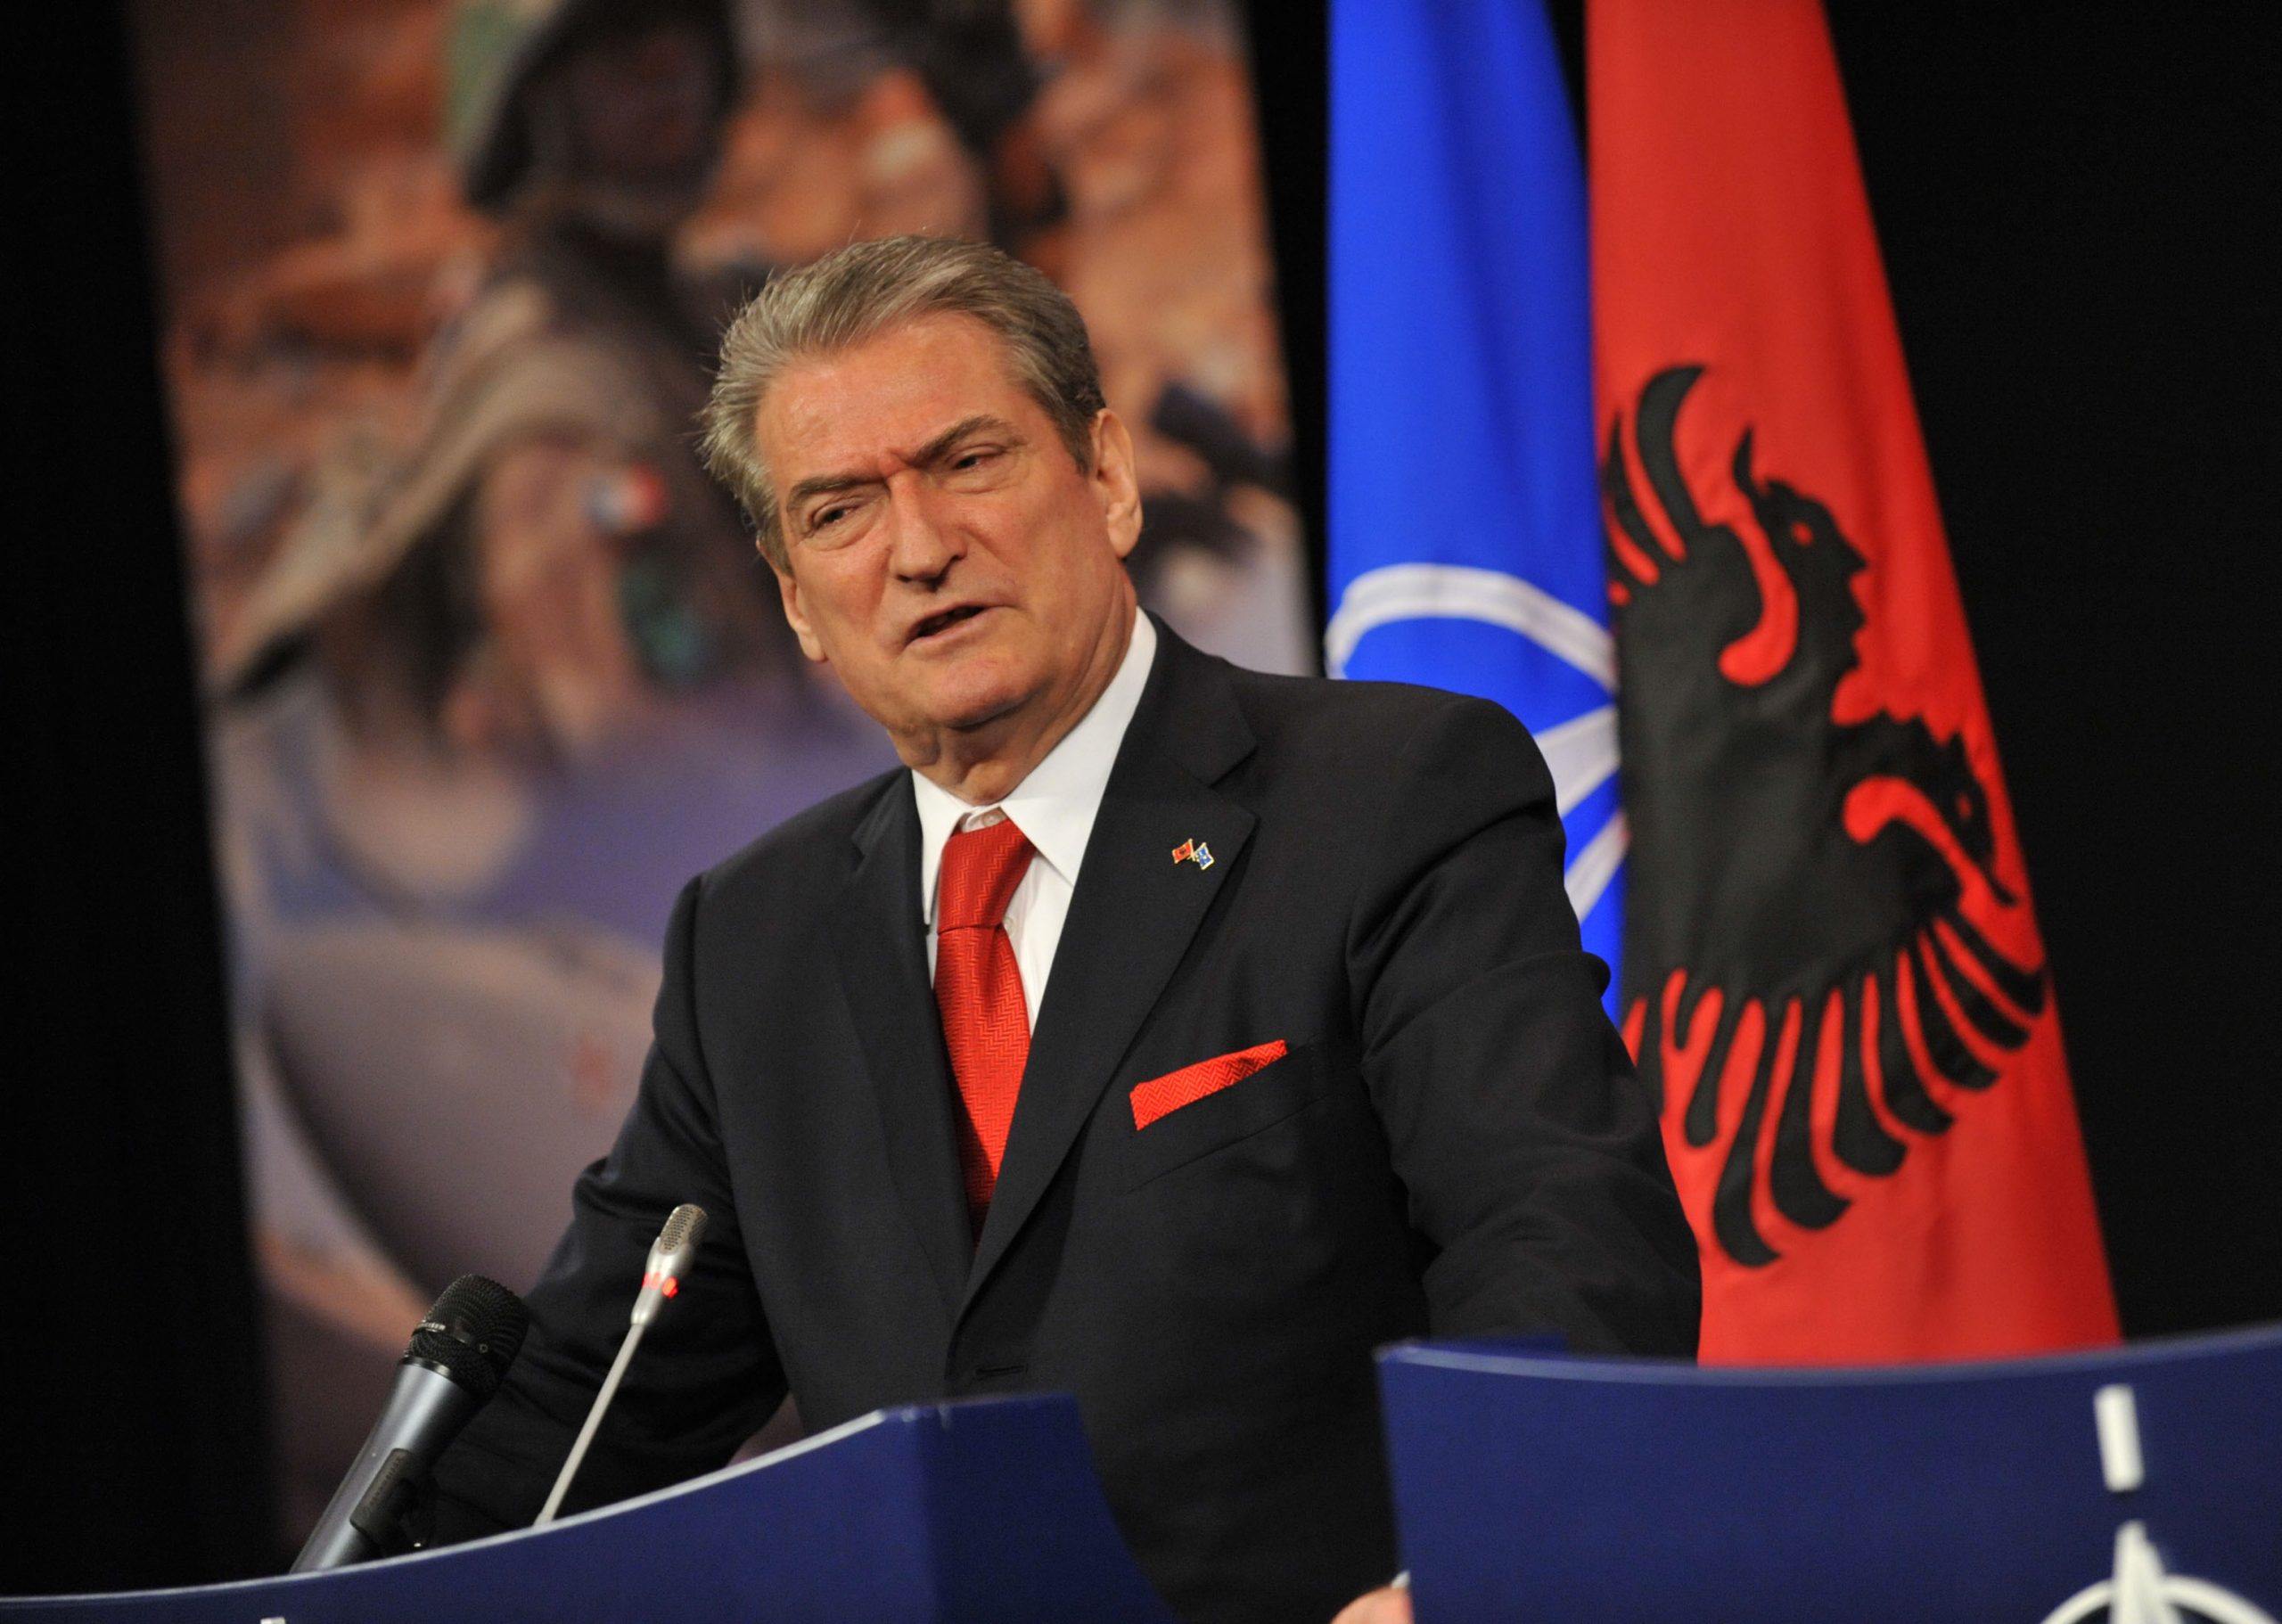 Former Albanian President Berisha to Sue US Secretary of State Blinken for Defamation - Exit - Explaining Albania